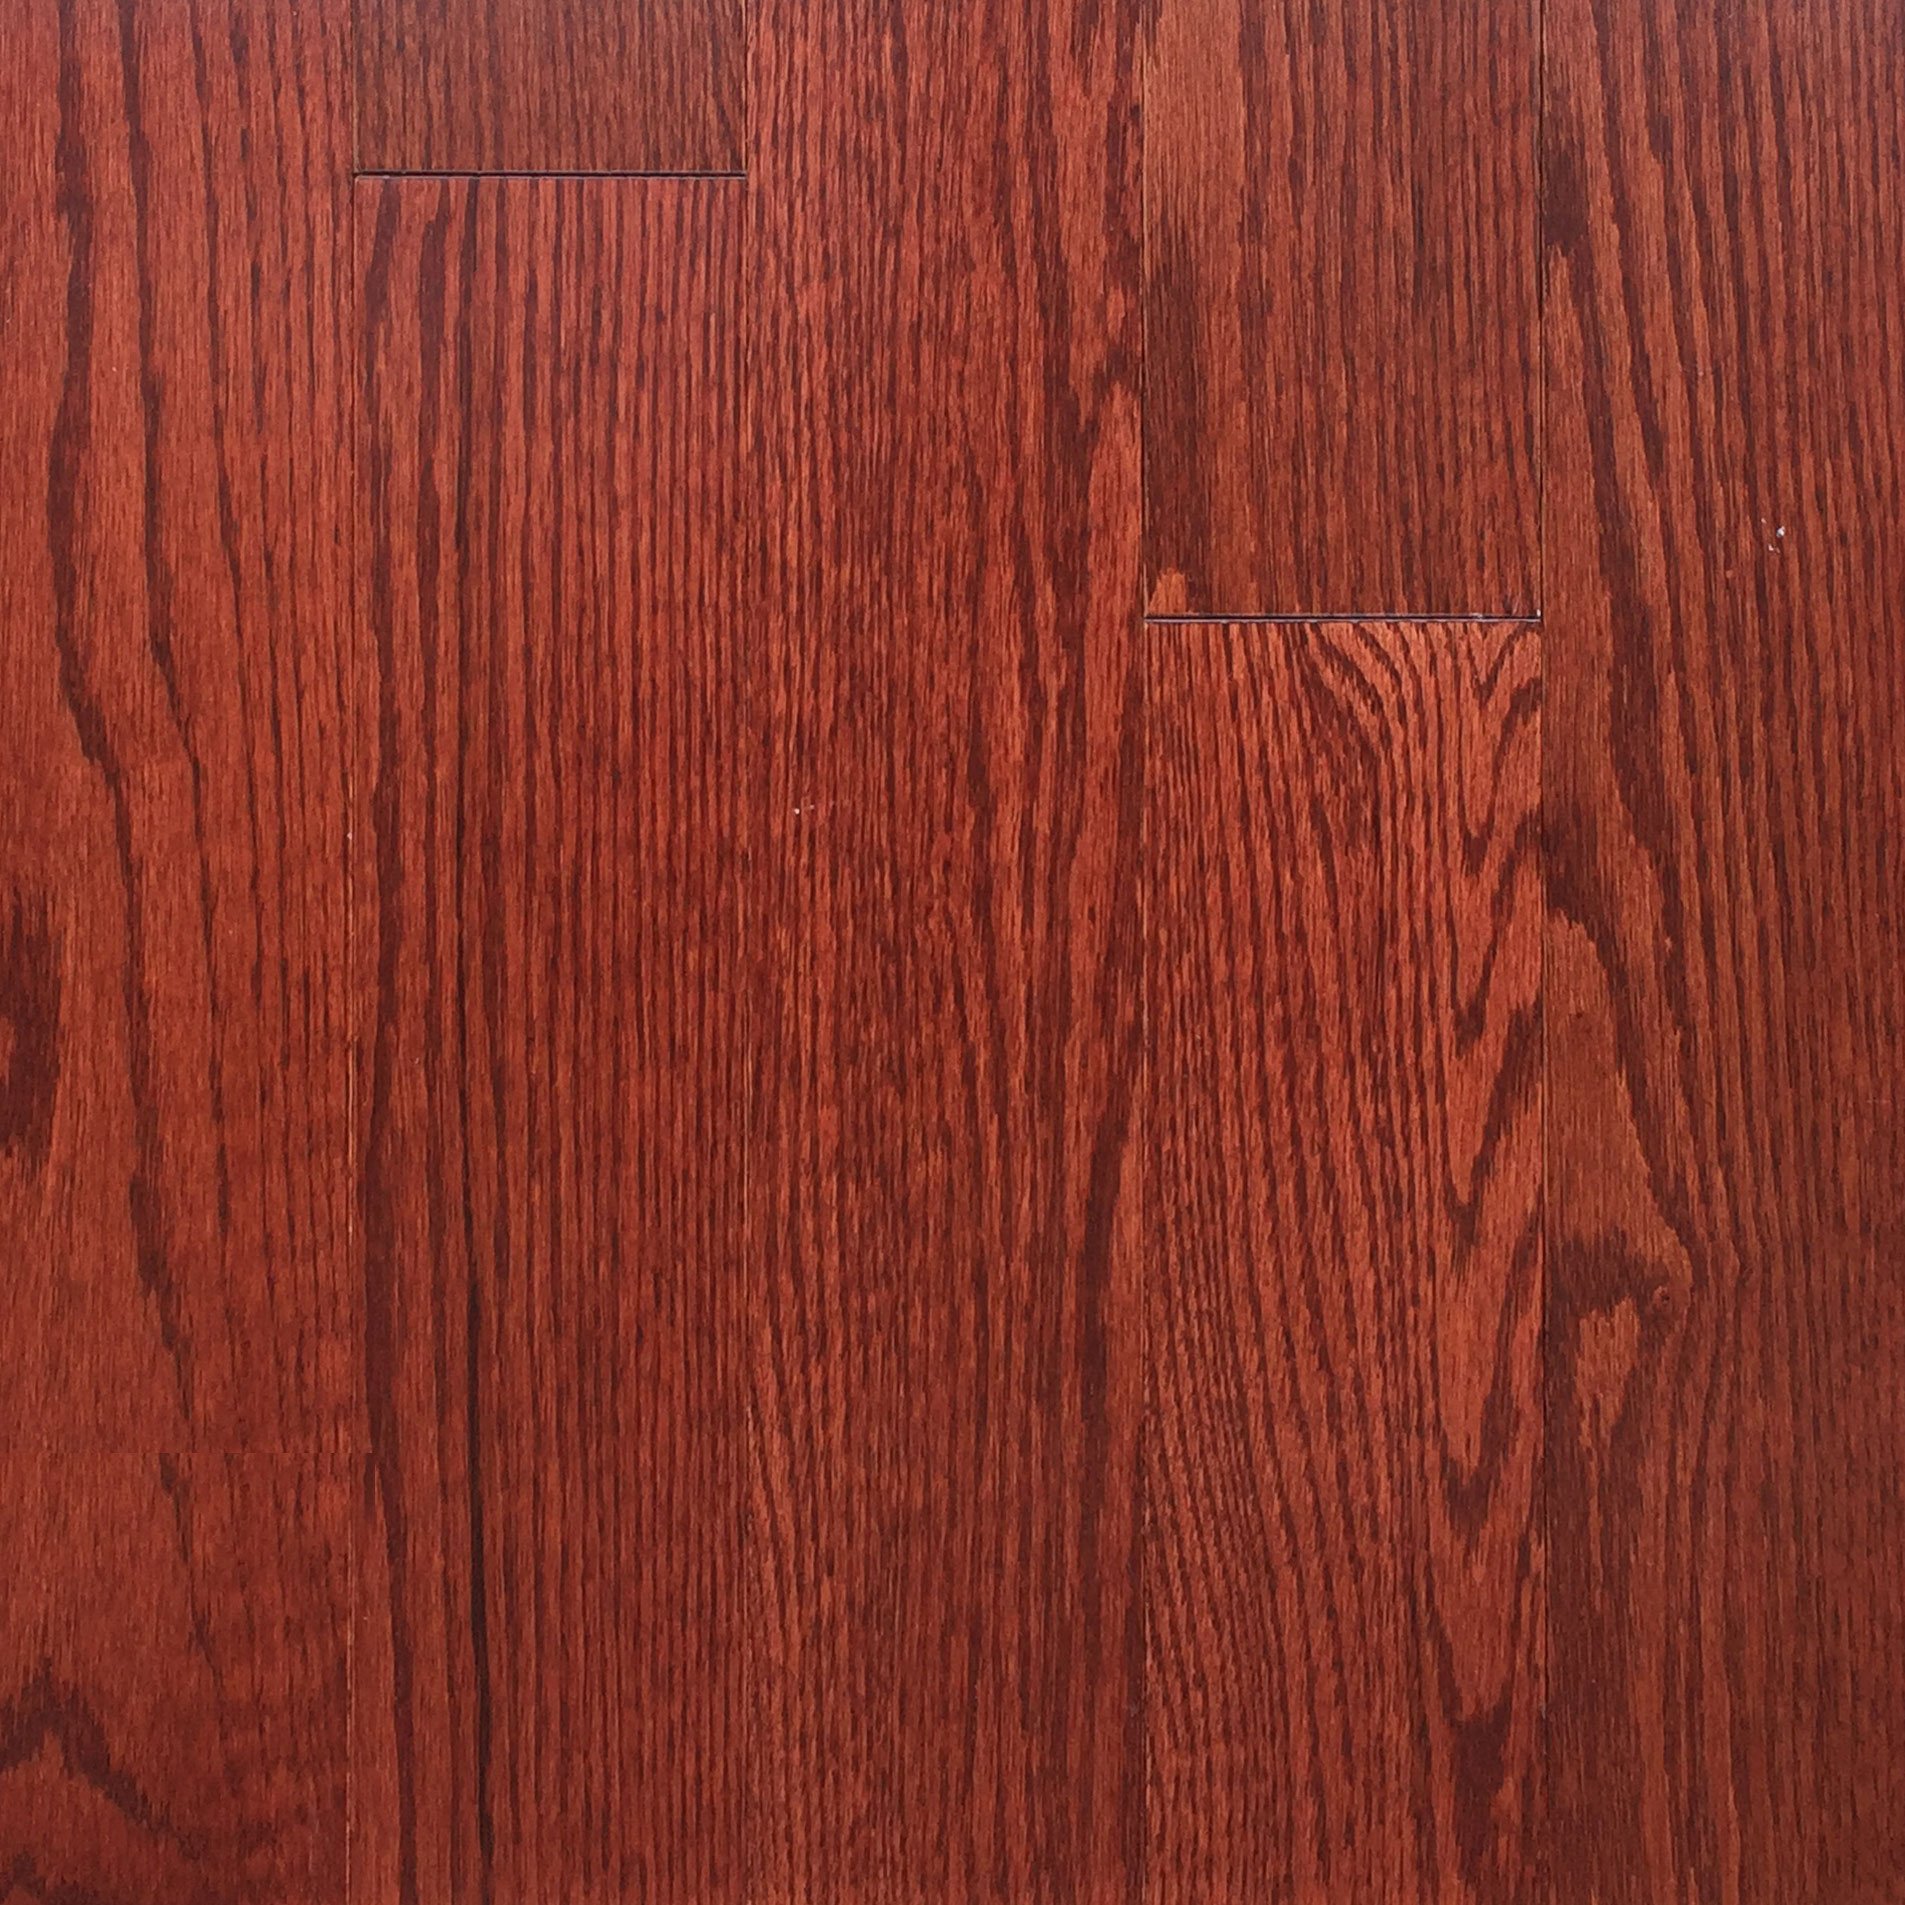 Red Oak Select Better Uphill Cherry, Prefinished Cherry Hardwood Flooring